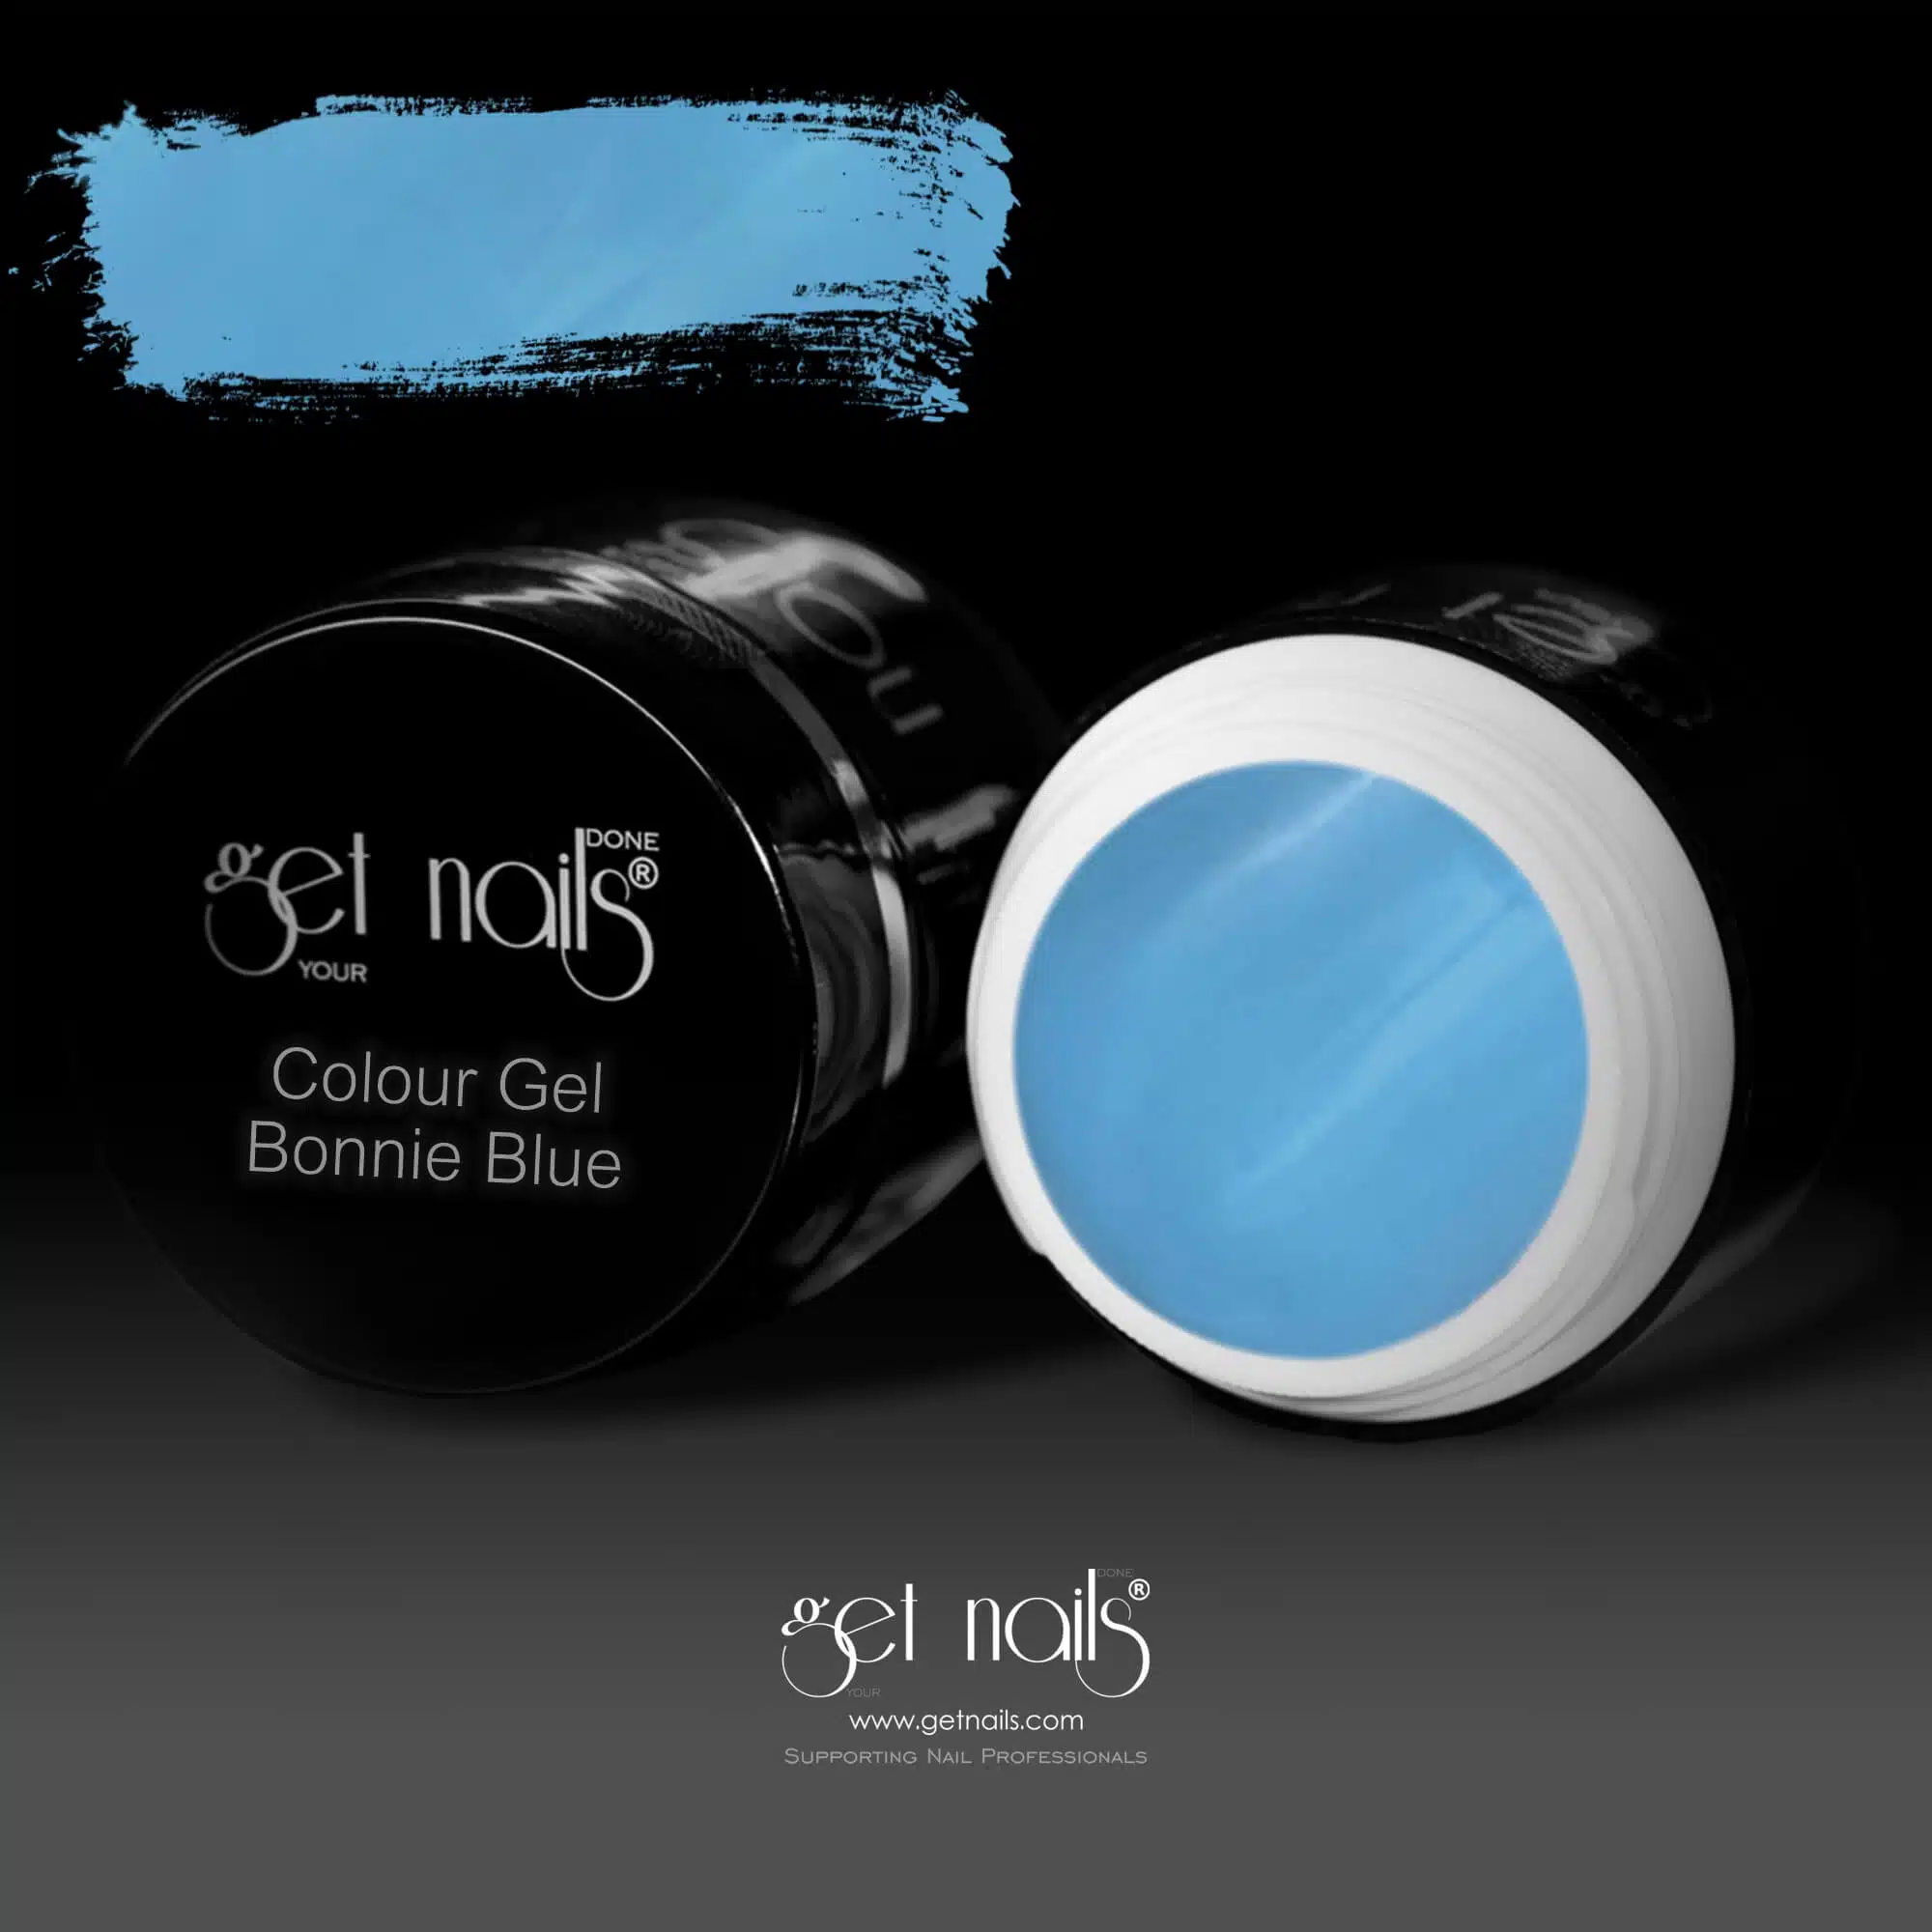 Get Nails Austria - Цветной гель Bonnie Blue 5g